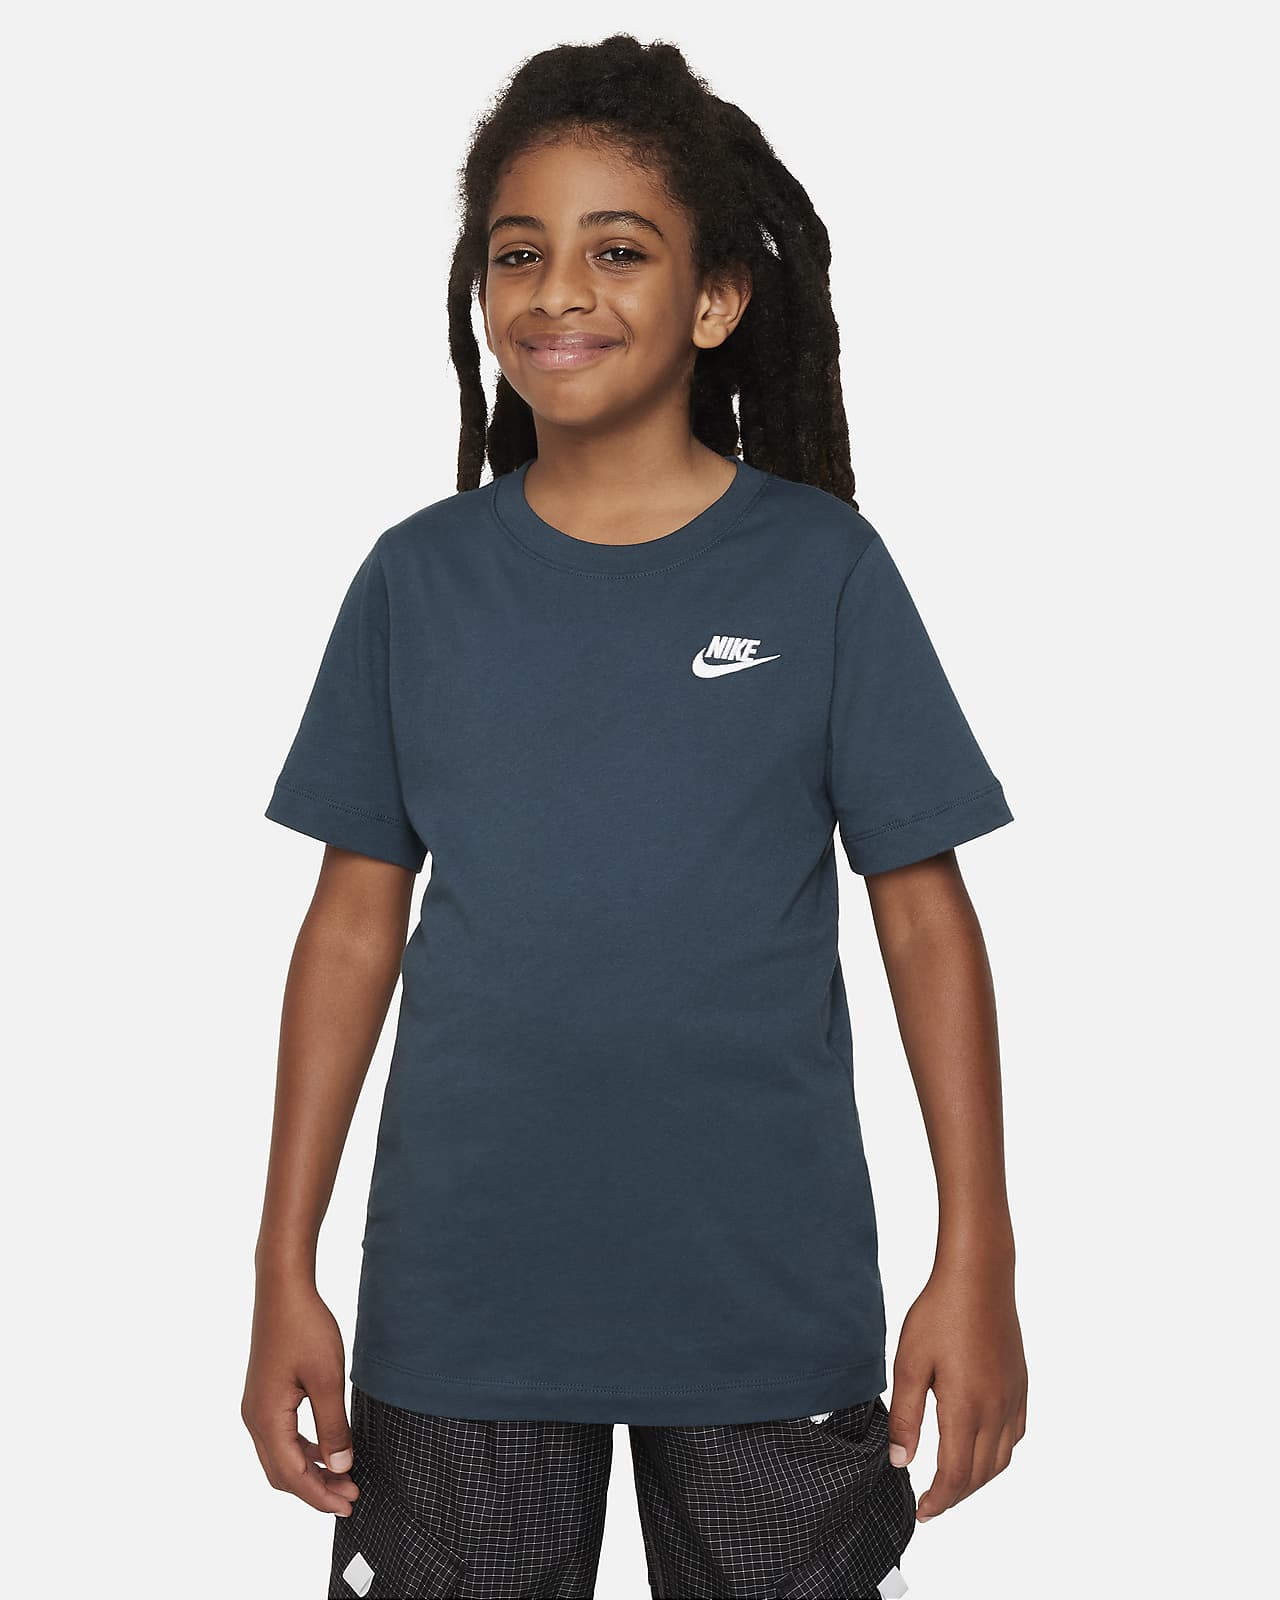 Kids' Nike T-shirts